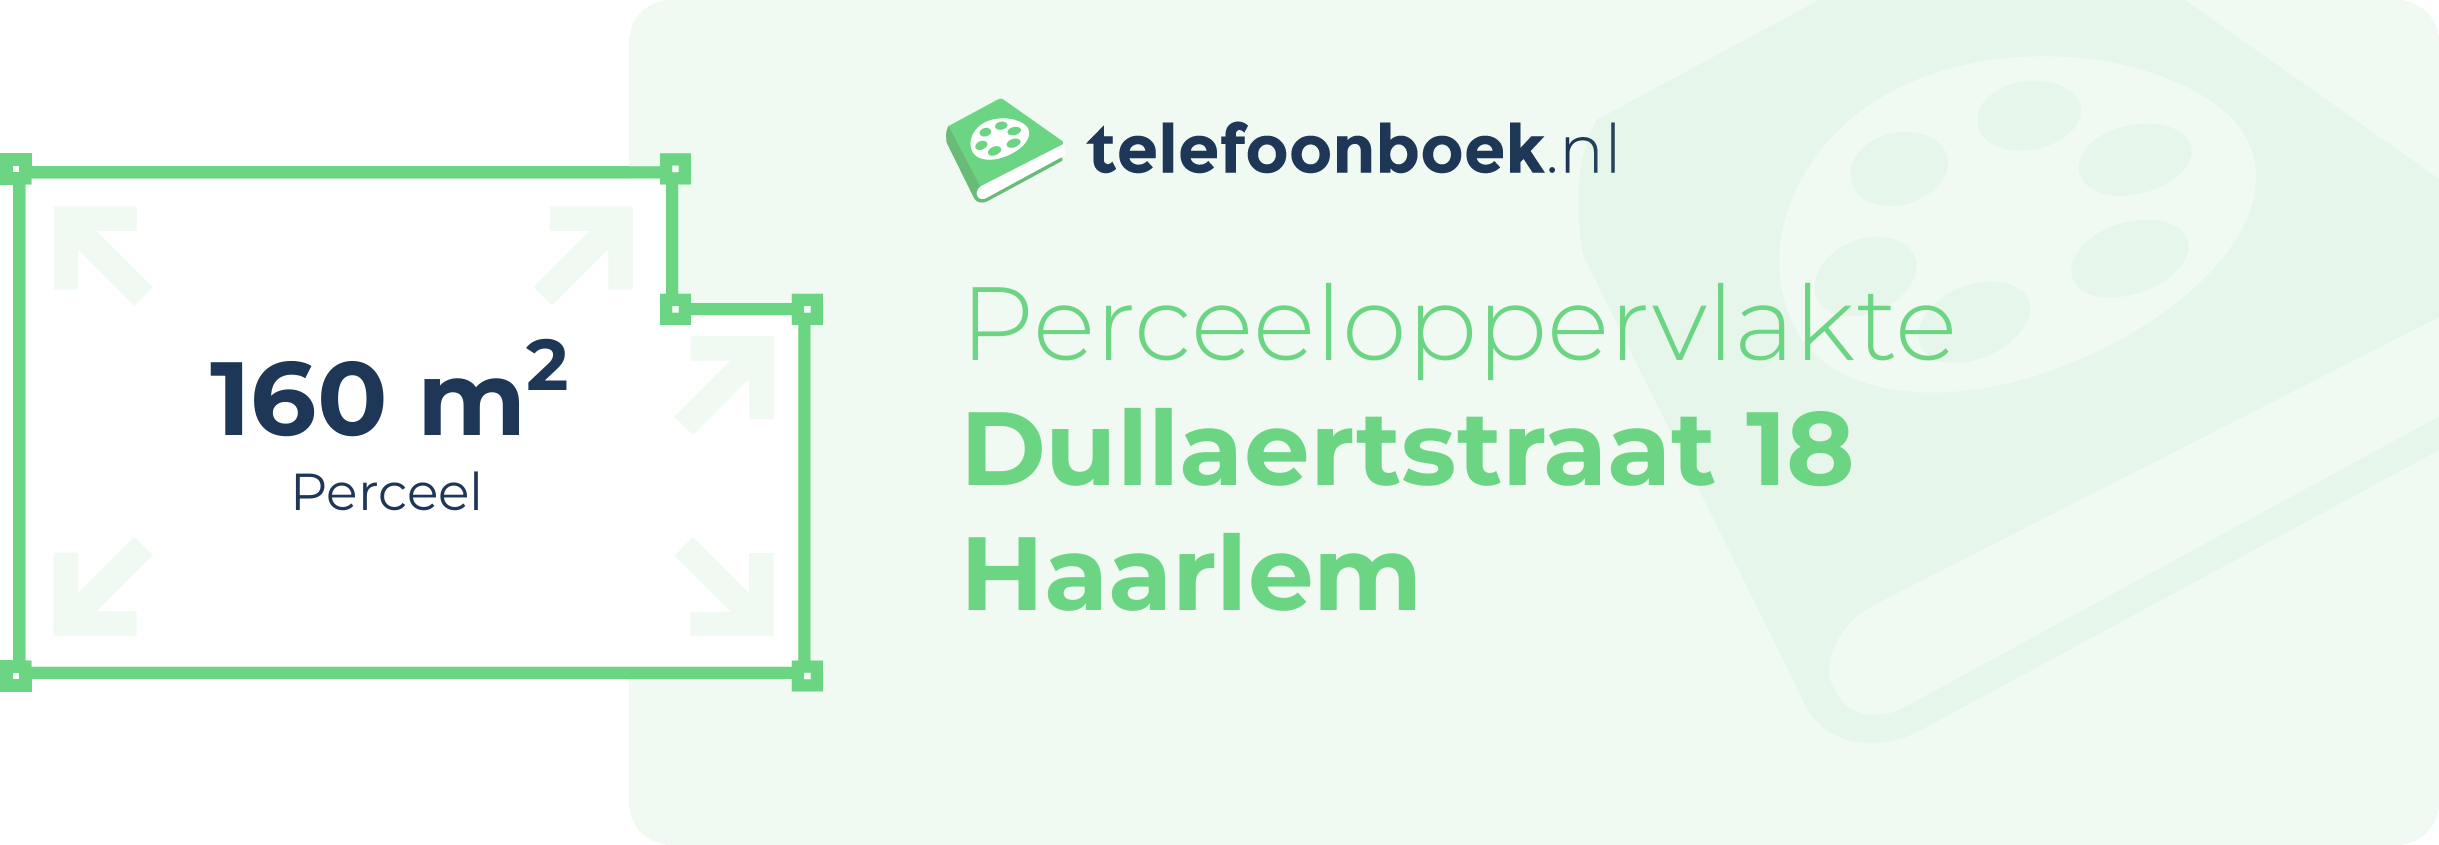 Perceeloppervlakte Dullaertstraat 18 Haarlem